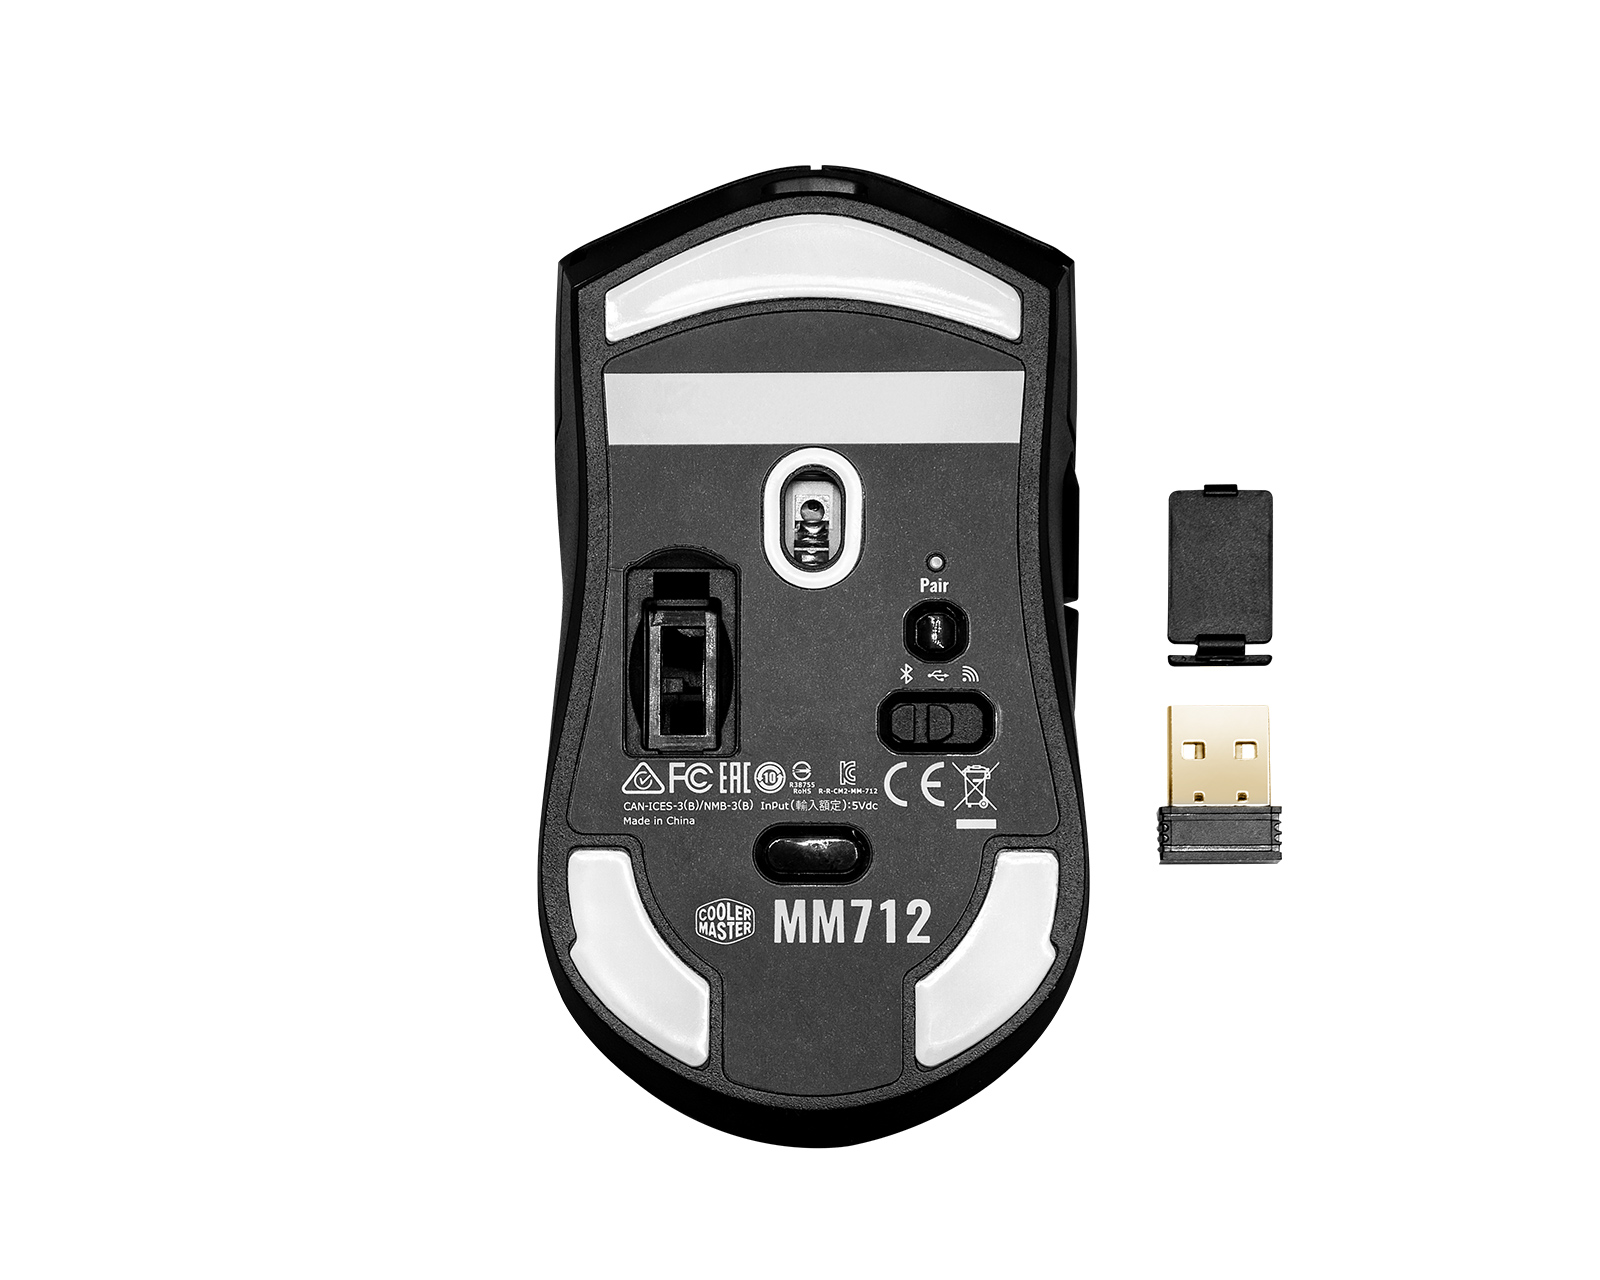 Cooler Master C700mcooler Master Mm712 Wireless Gaming Mouse - 19000dpi,  Rgb, Bluetooth 5.1